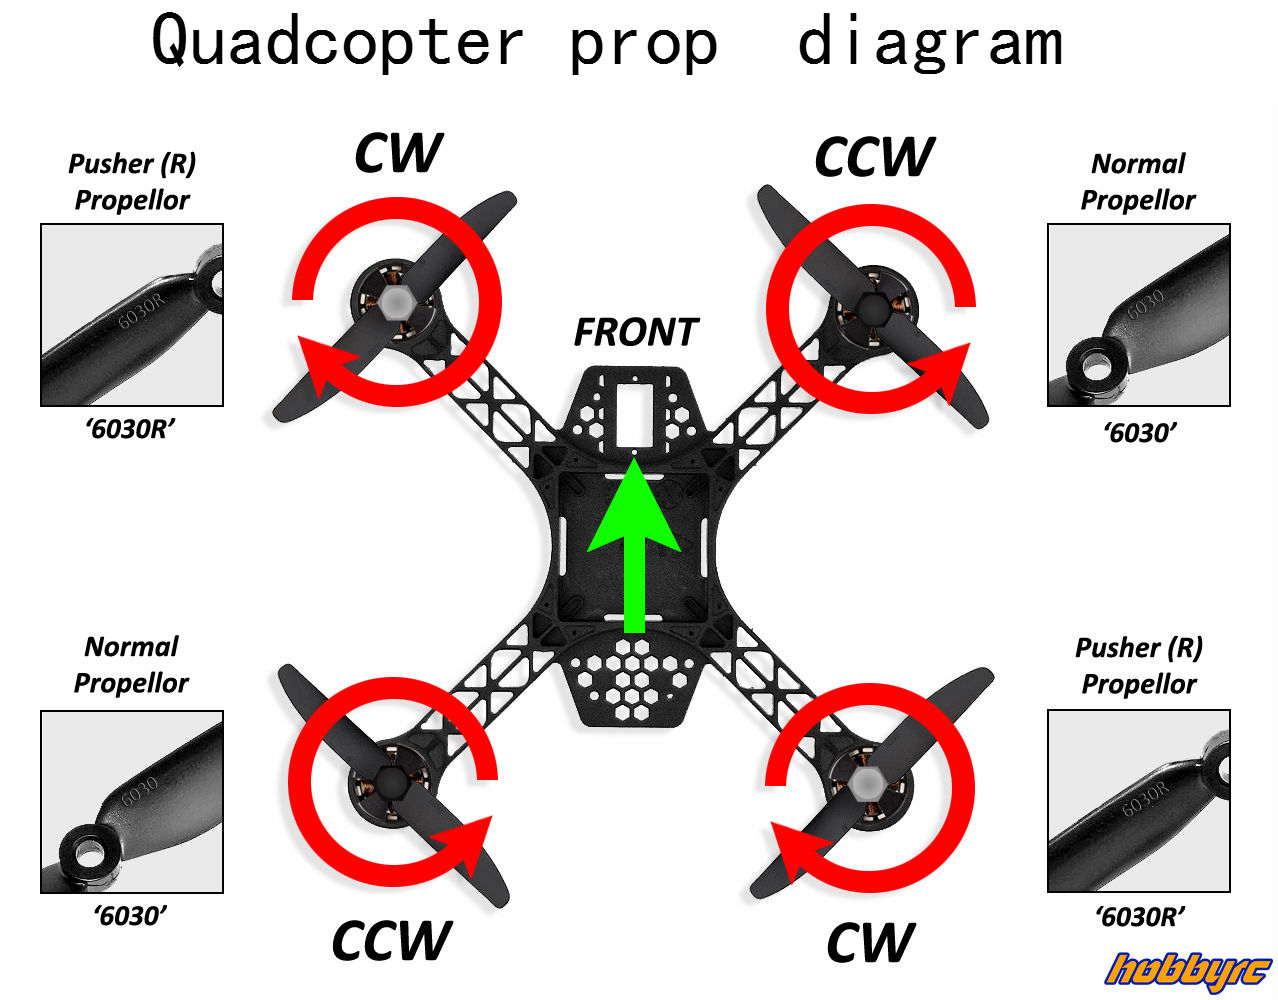 Quadcopter Wiring Diagram Manual | Wiring Diagram - Pixhawk Wiring Diagram